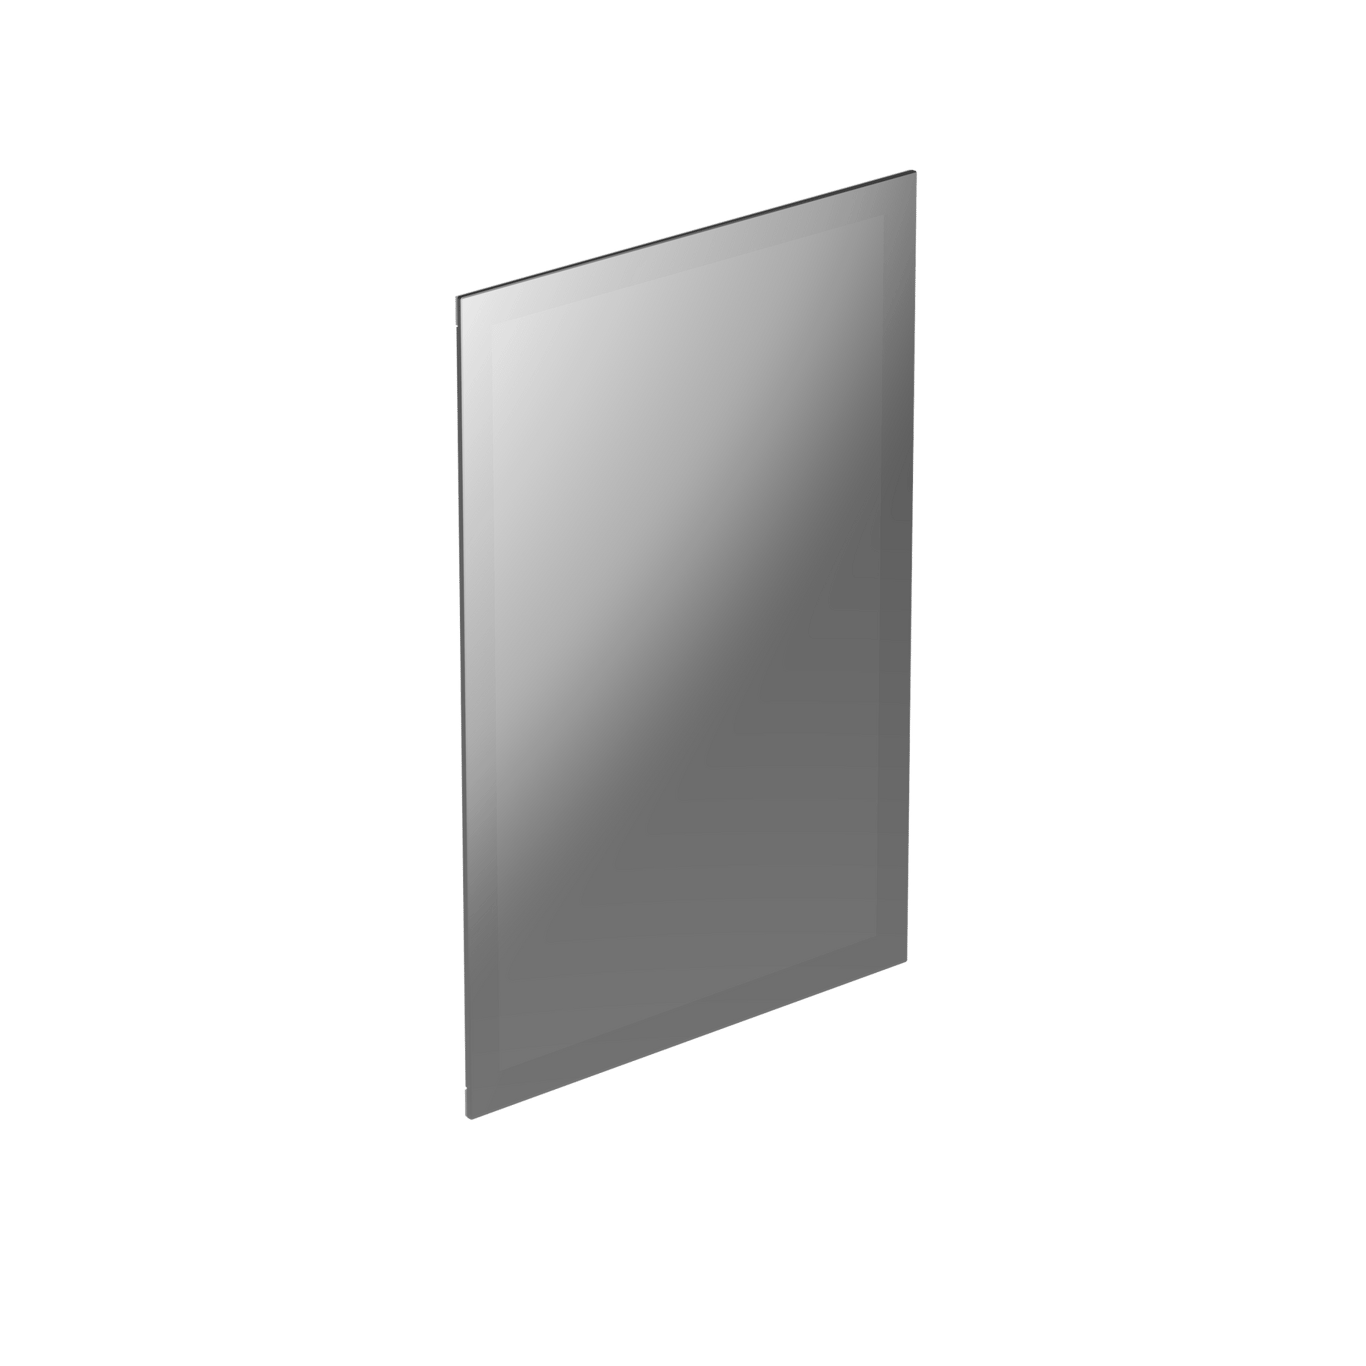 SSUPD Meshlicious Side Panel 鏡面玻璃側板 - Grey 灰色